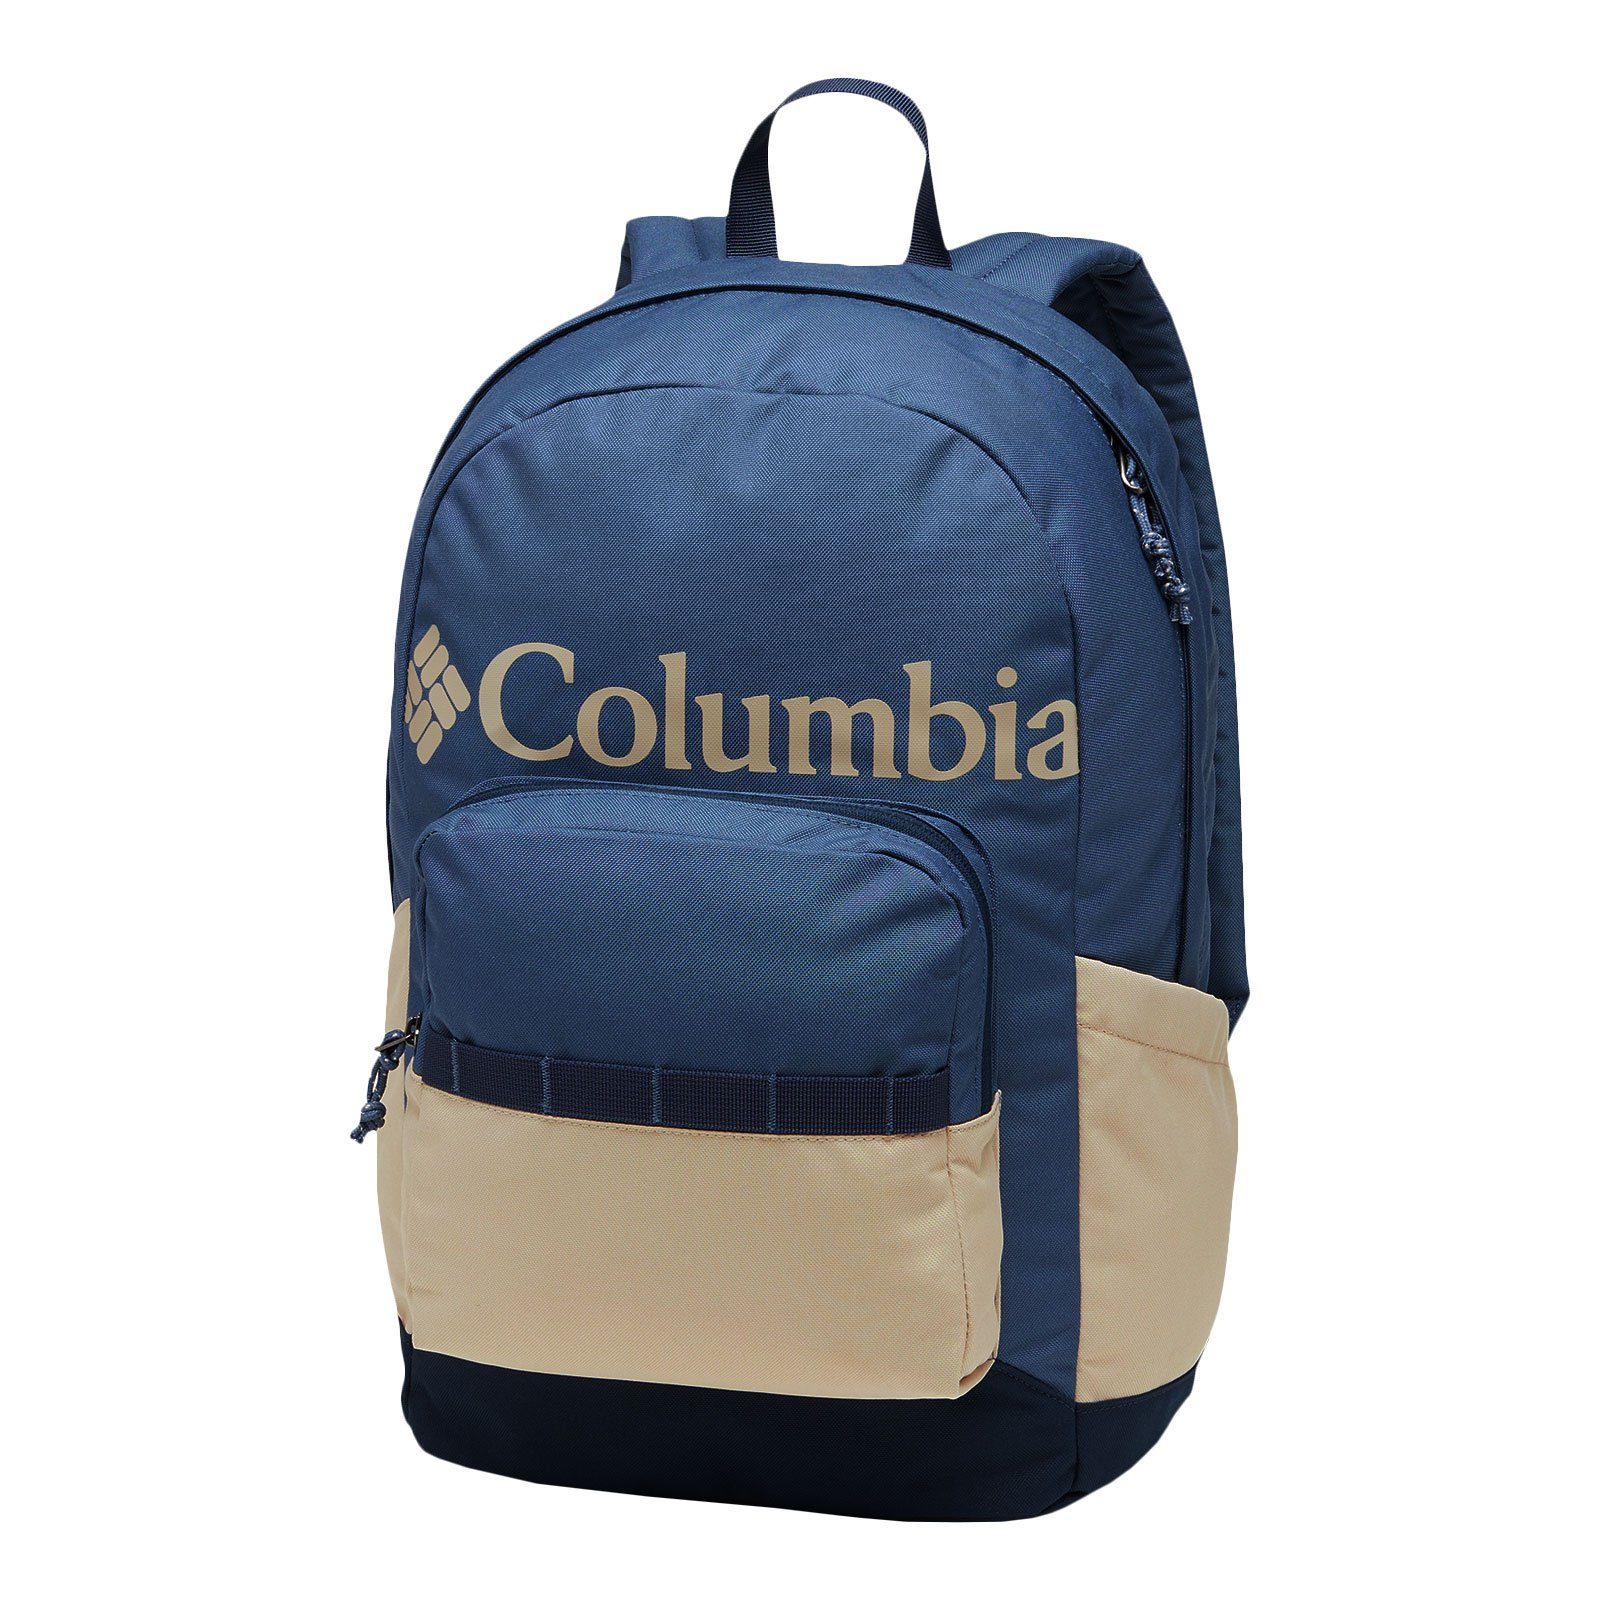 Zigzag™ Backpack, Columbia Freizeitrucksack 22L Laptopfach mit